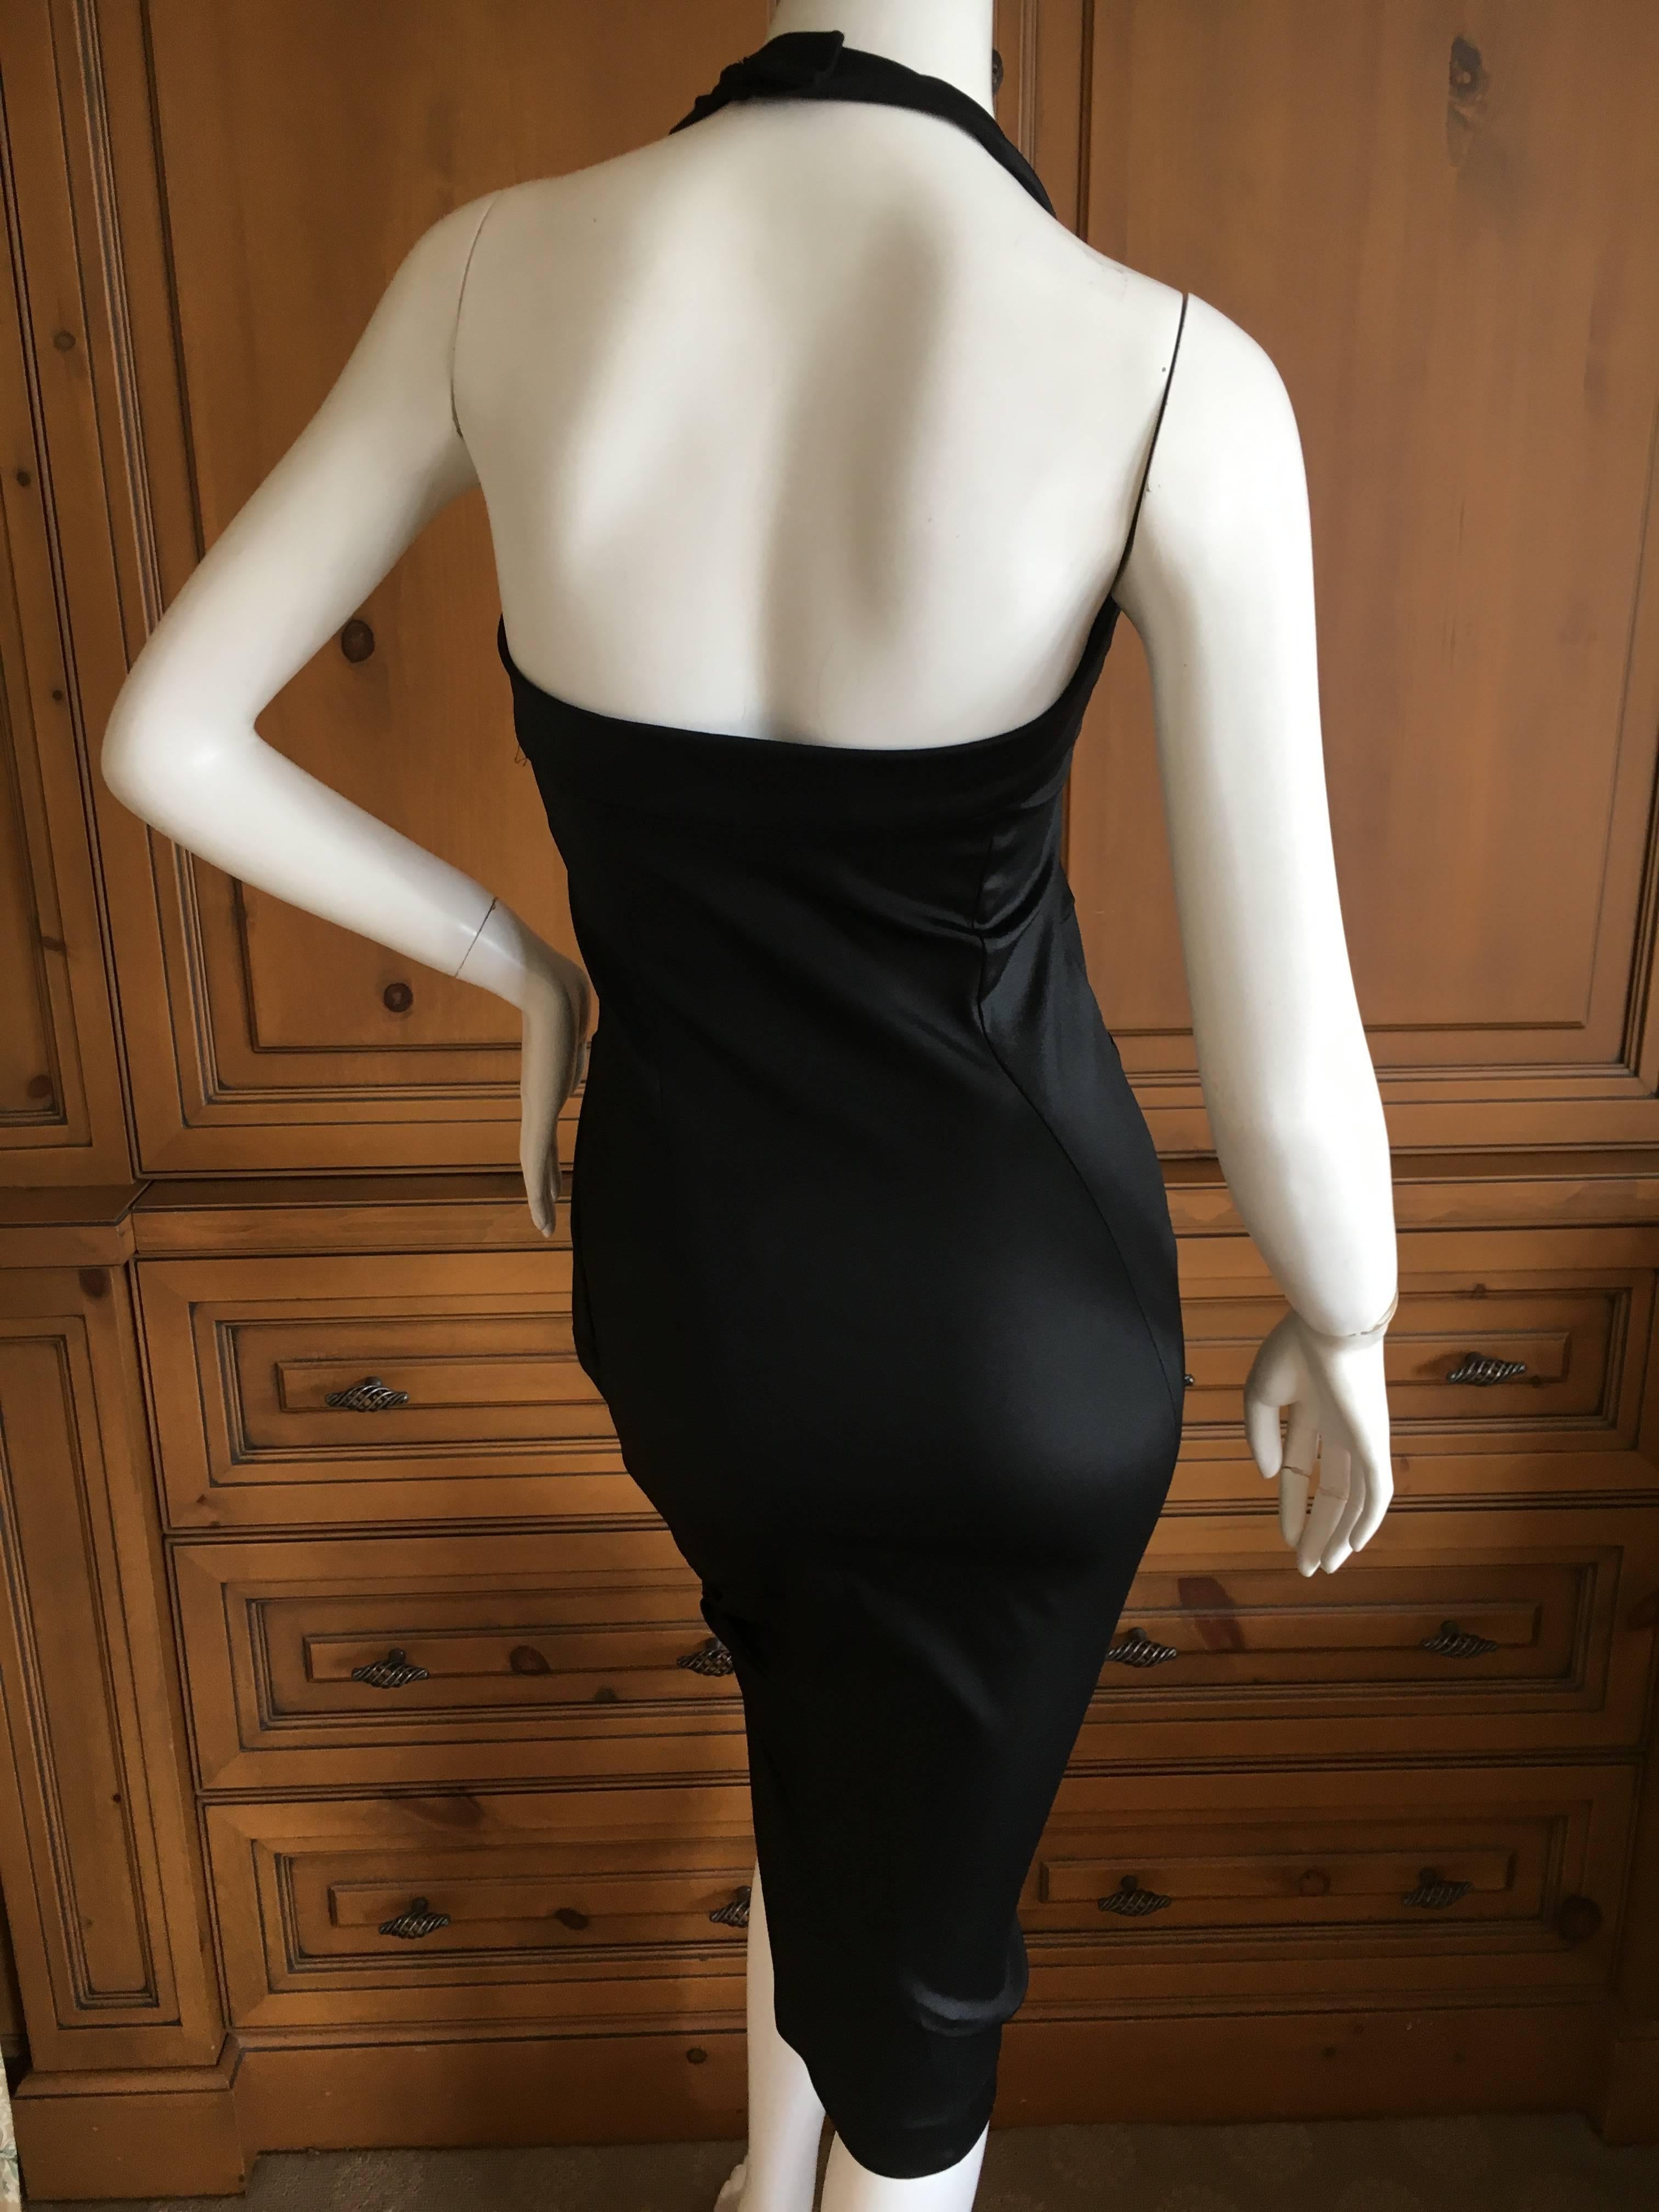 Women's Christian Dior by Galliano Black Stretch Bodycon Knot Dress